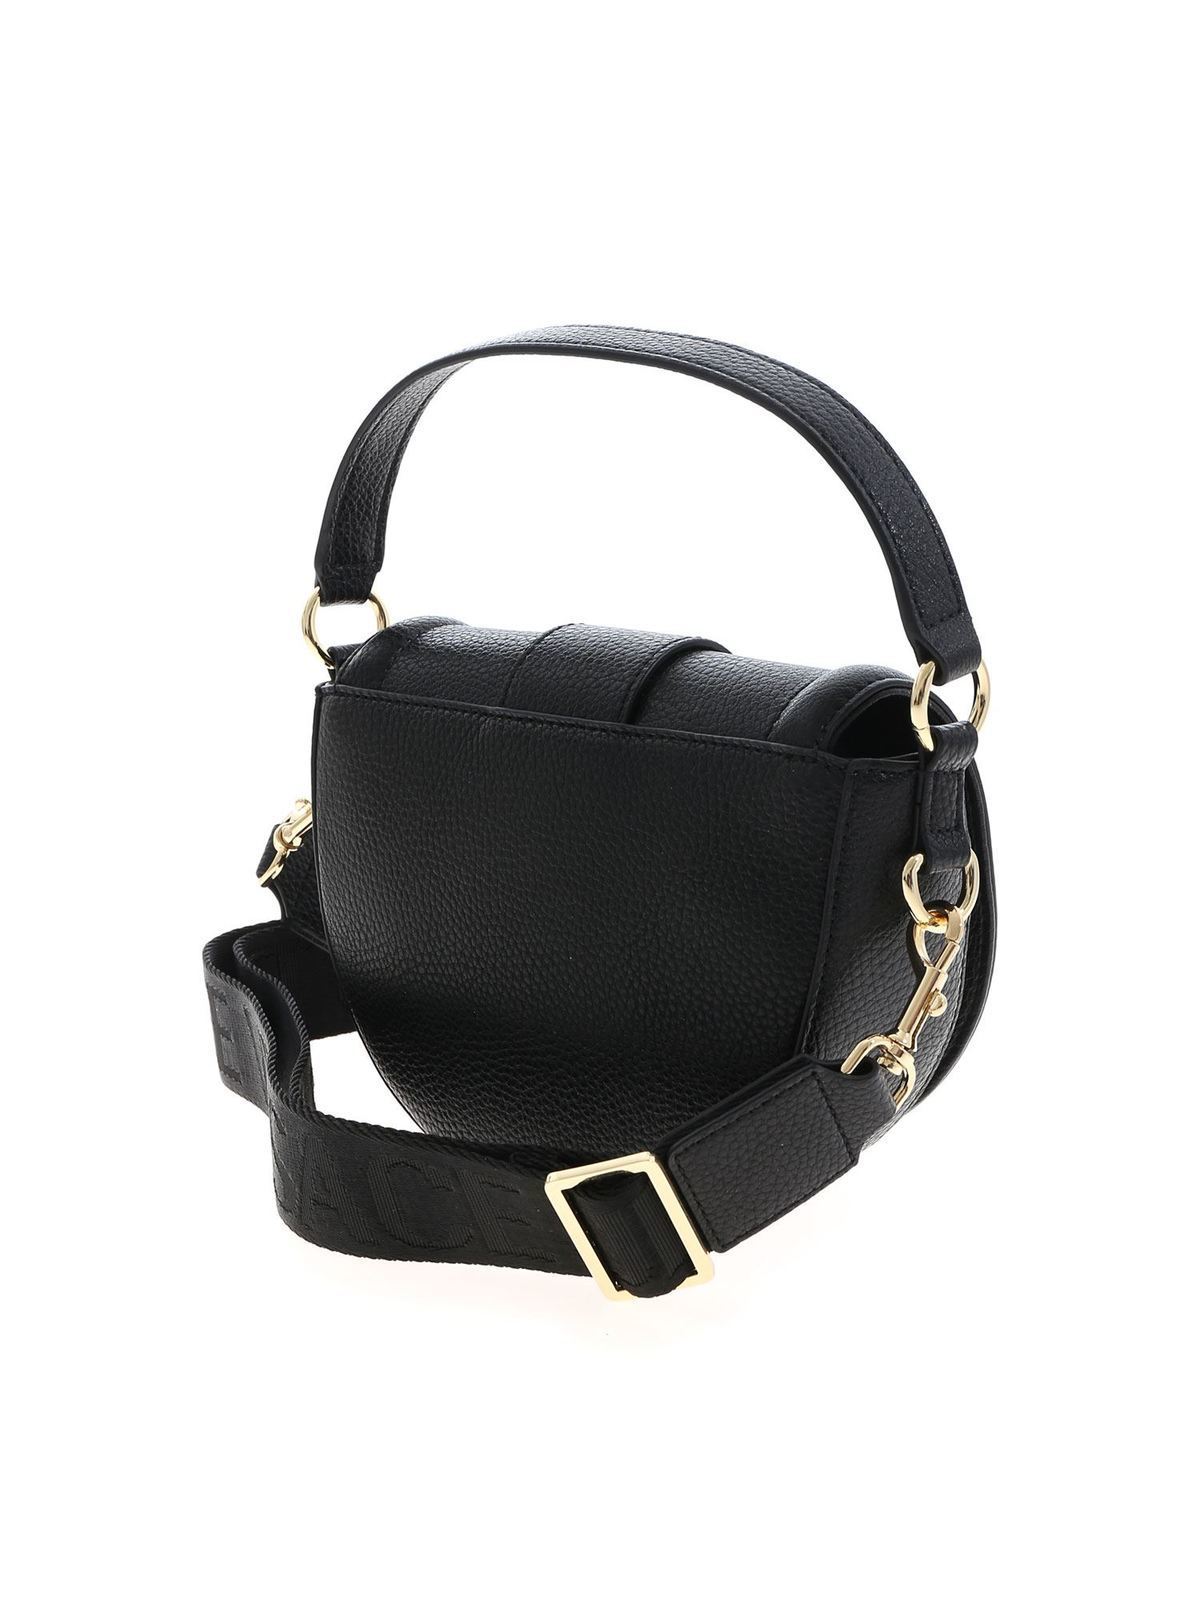 Totes bags Versace Jeans Couture - Baroque buckle handbag 